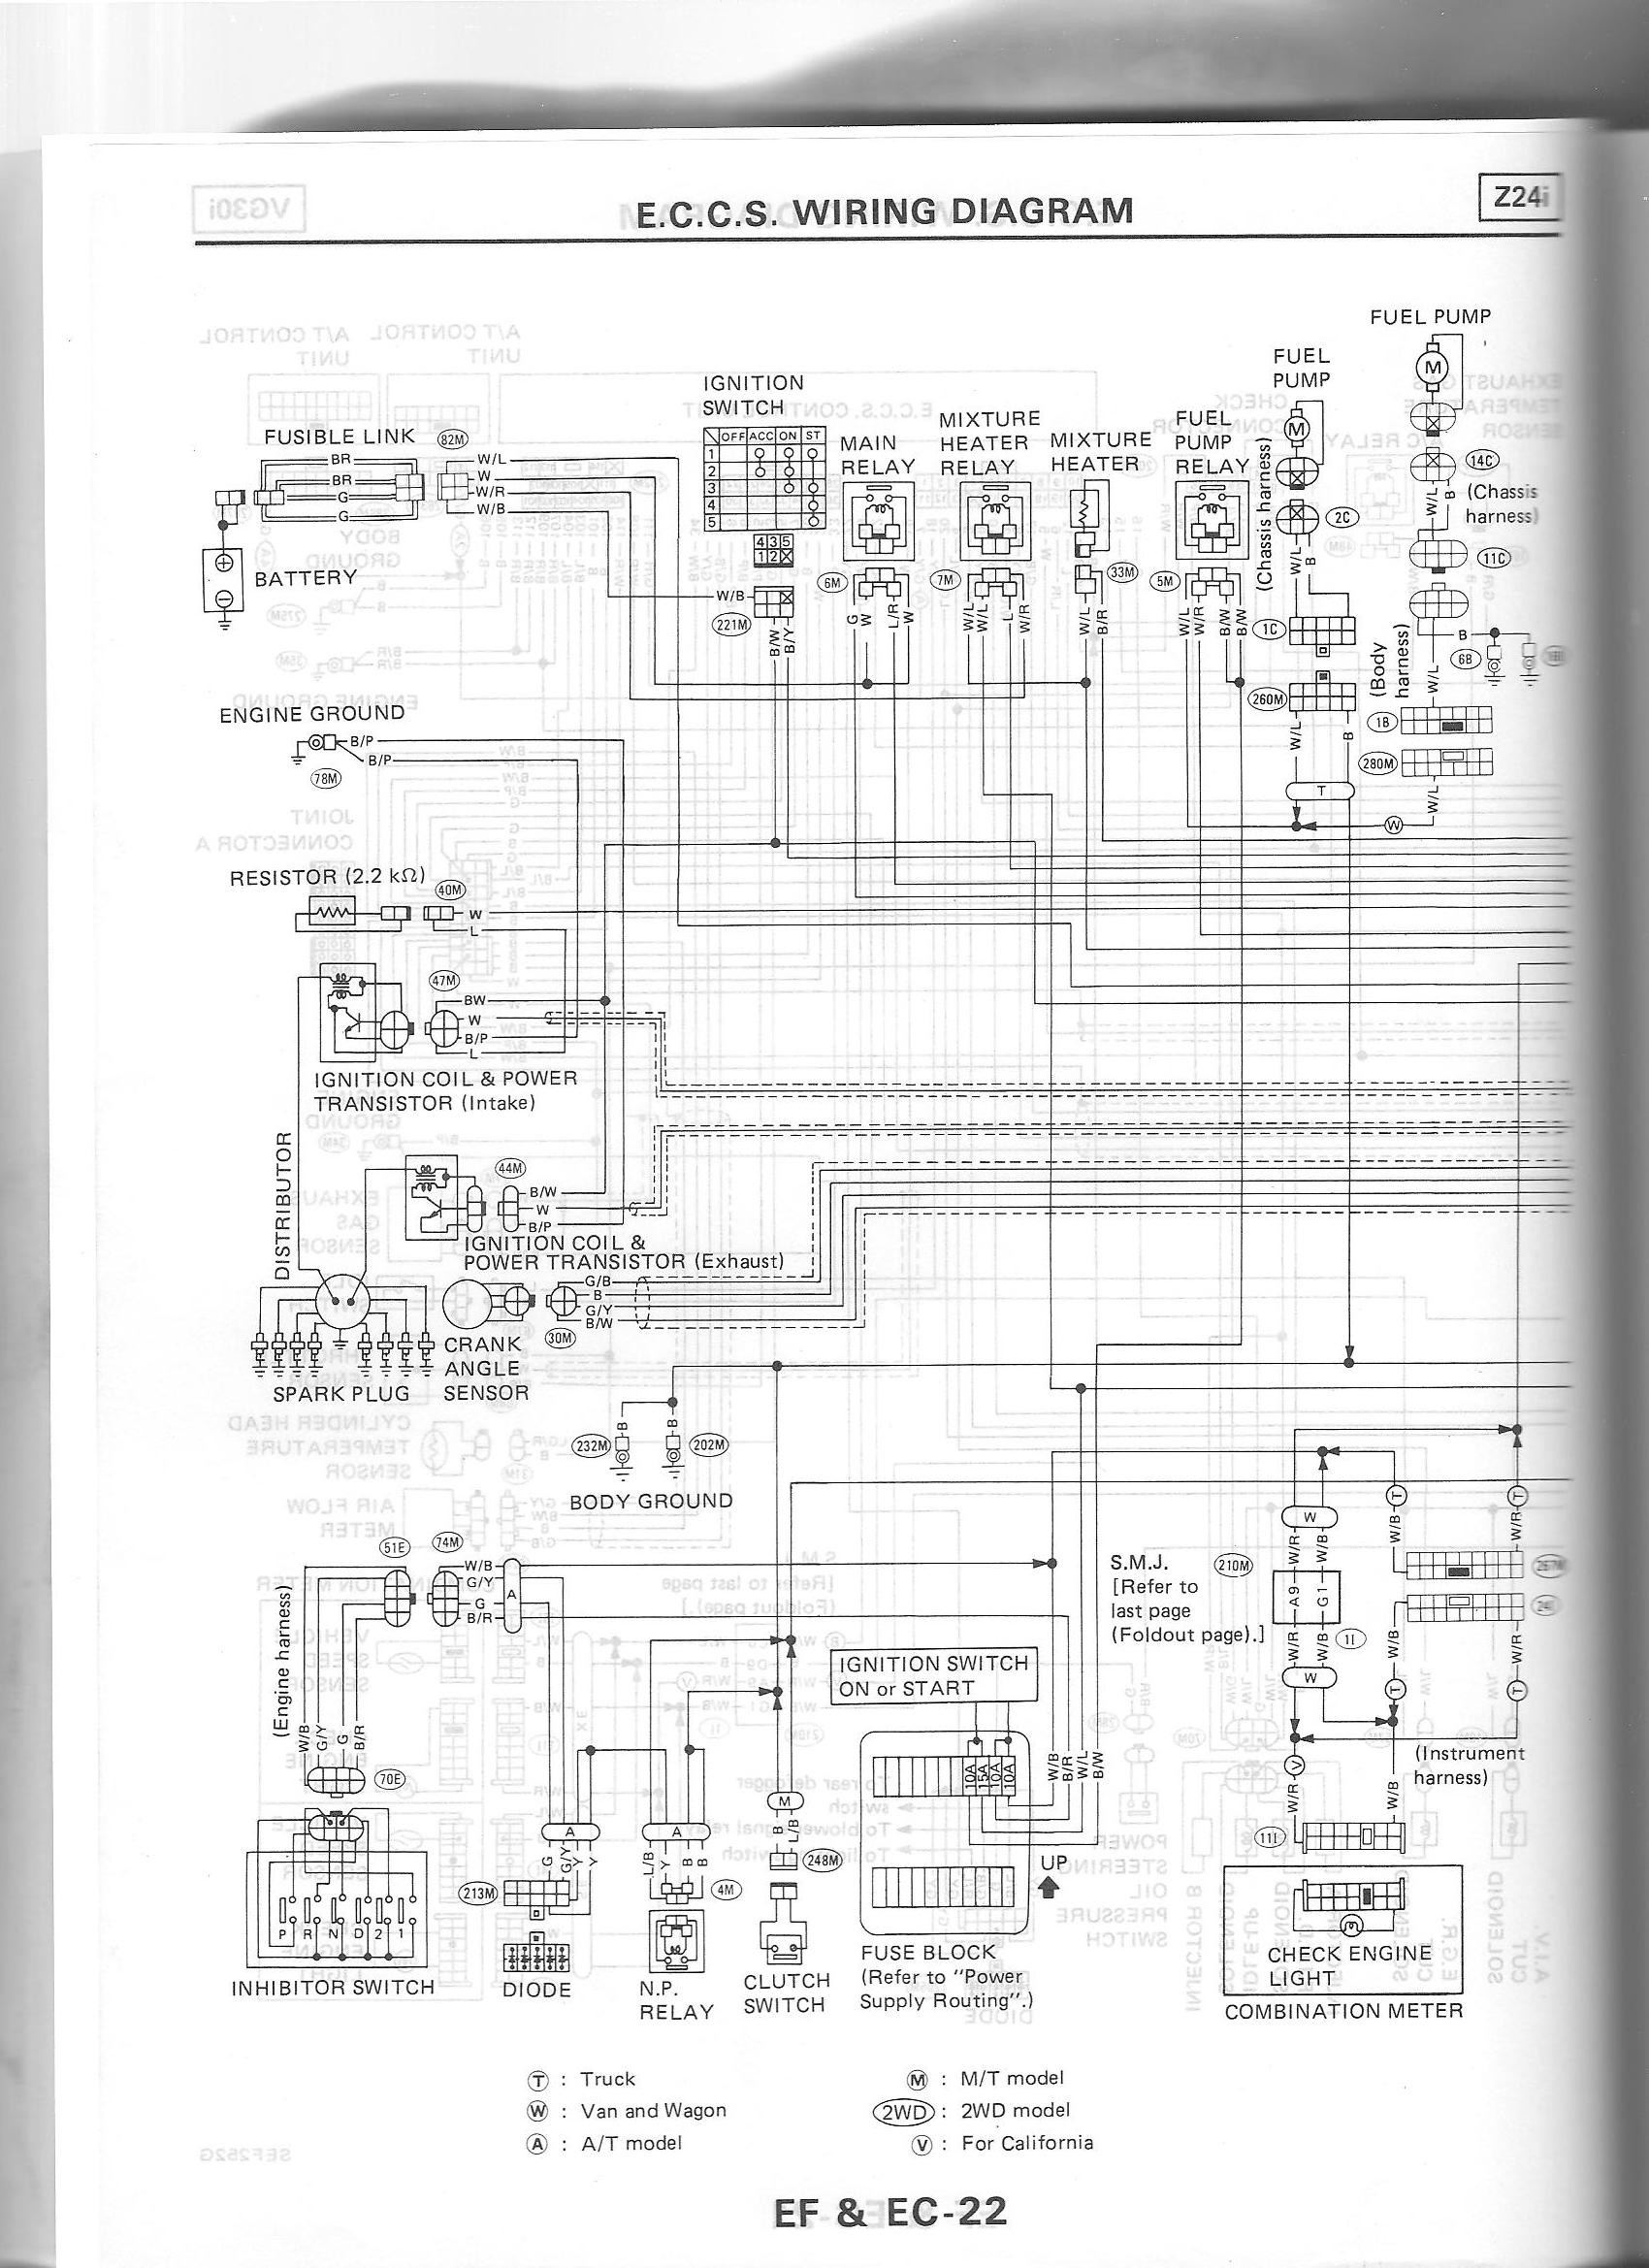 Nissan Pathfinder Wiring Diagram from detoxicrecenze.com